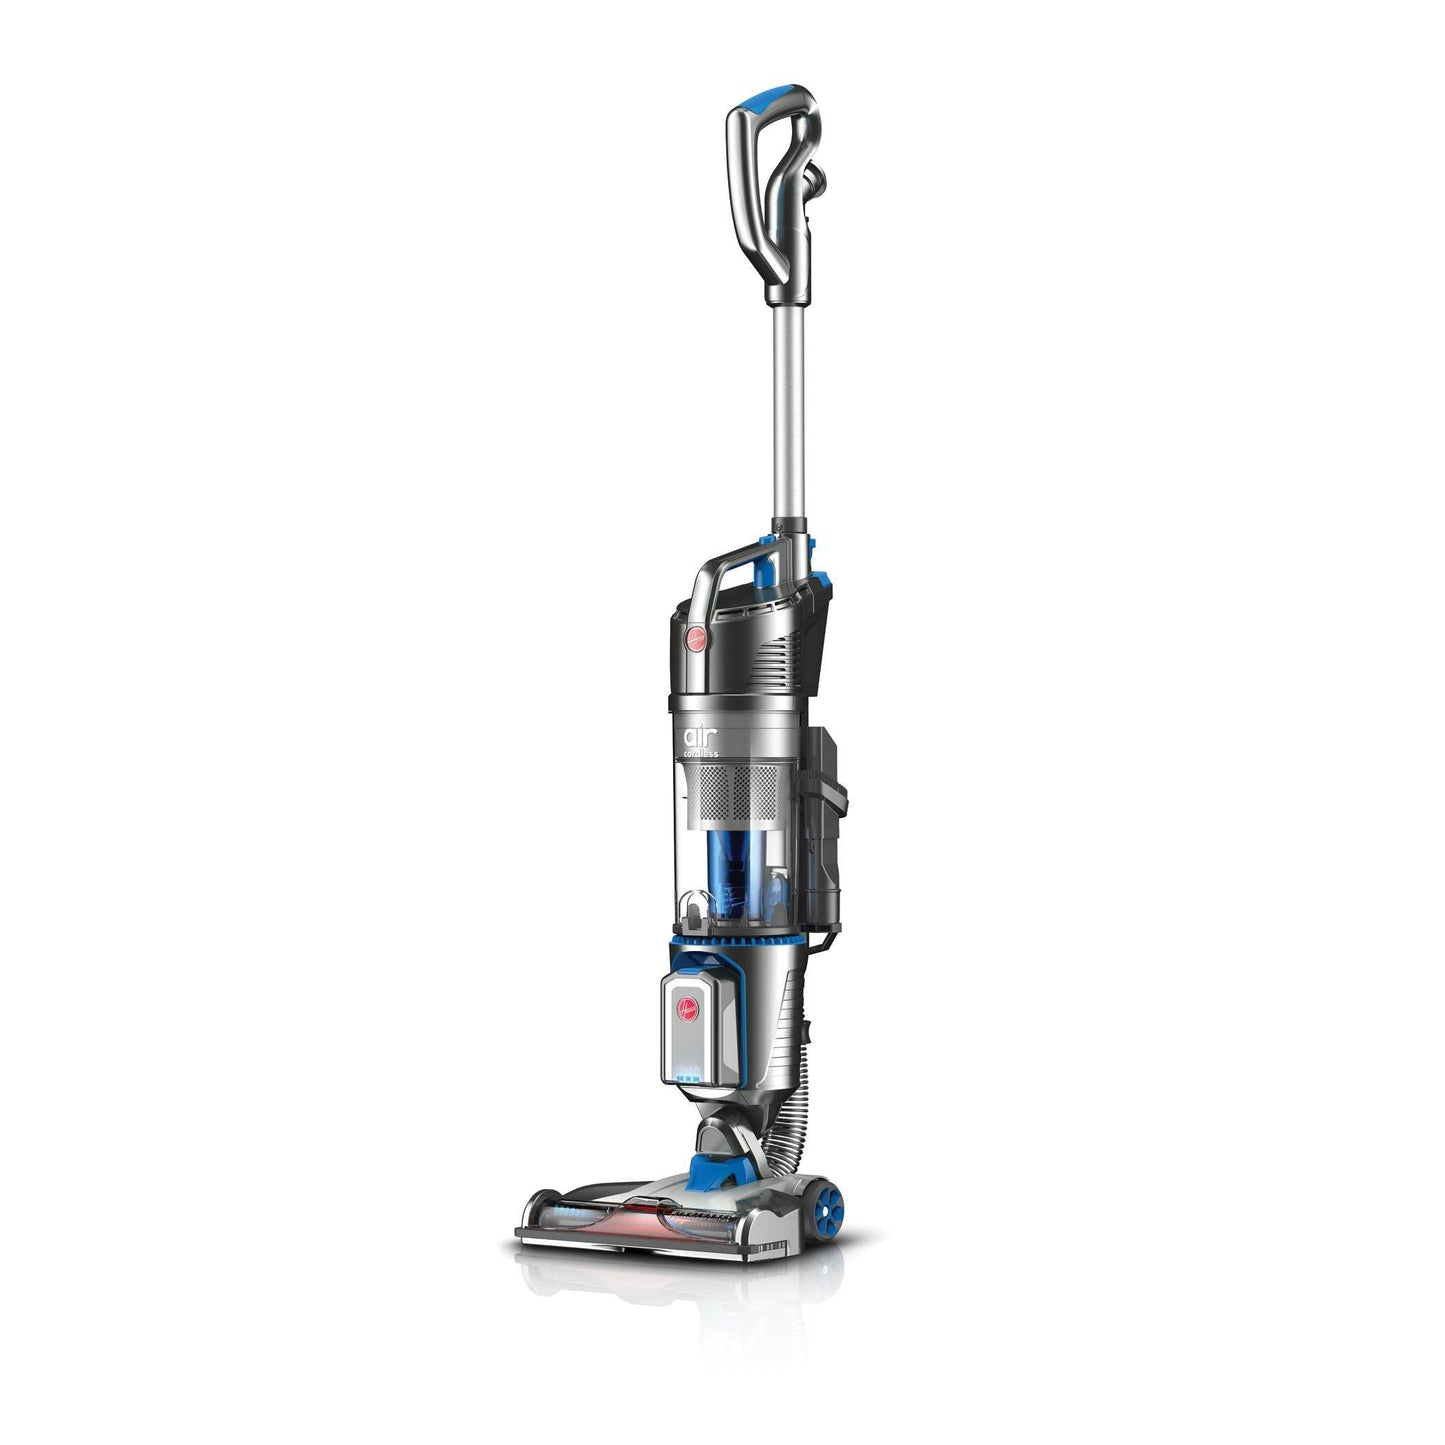 Air&trade; Cordless Series 1.0 Upright Vacuum